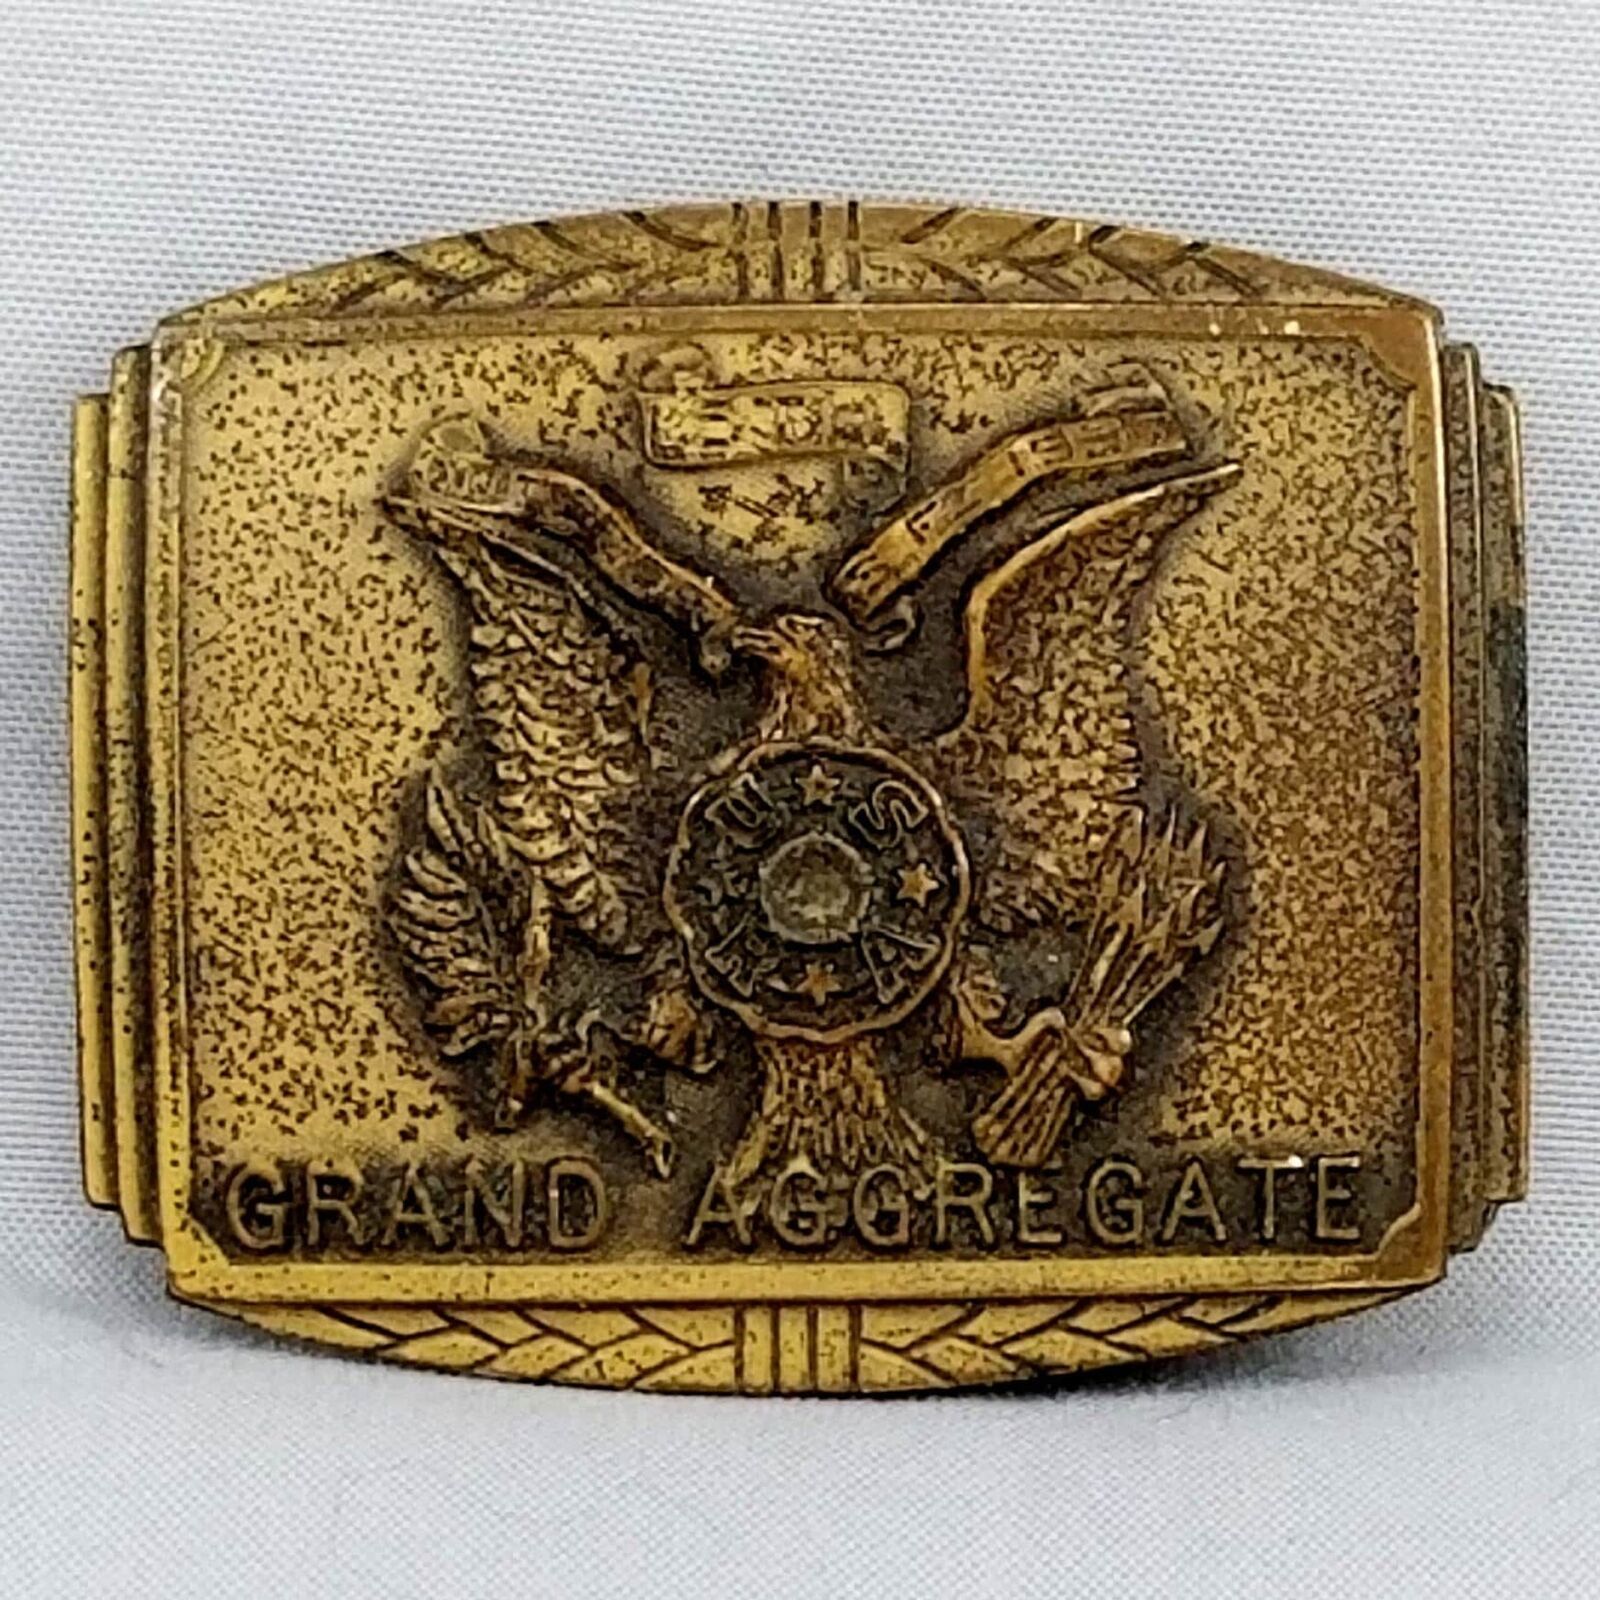 Primary image for Vintage Belt Buckle 5th Grand Aggregate U.S. Revolver Association Robbins Attleb